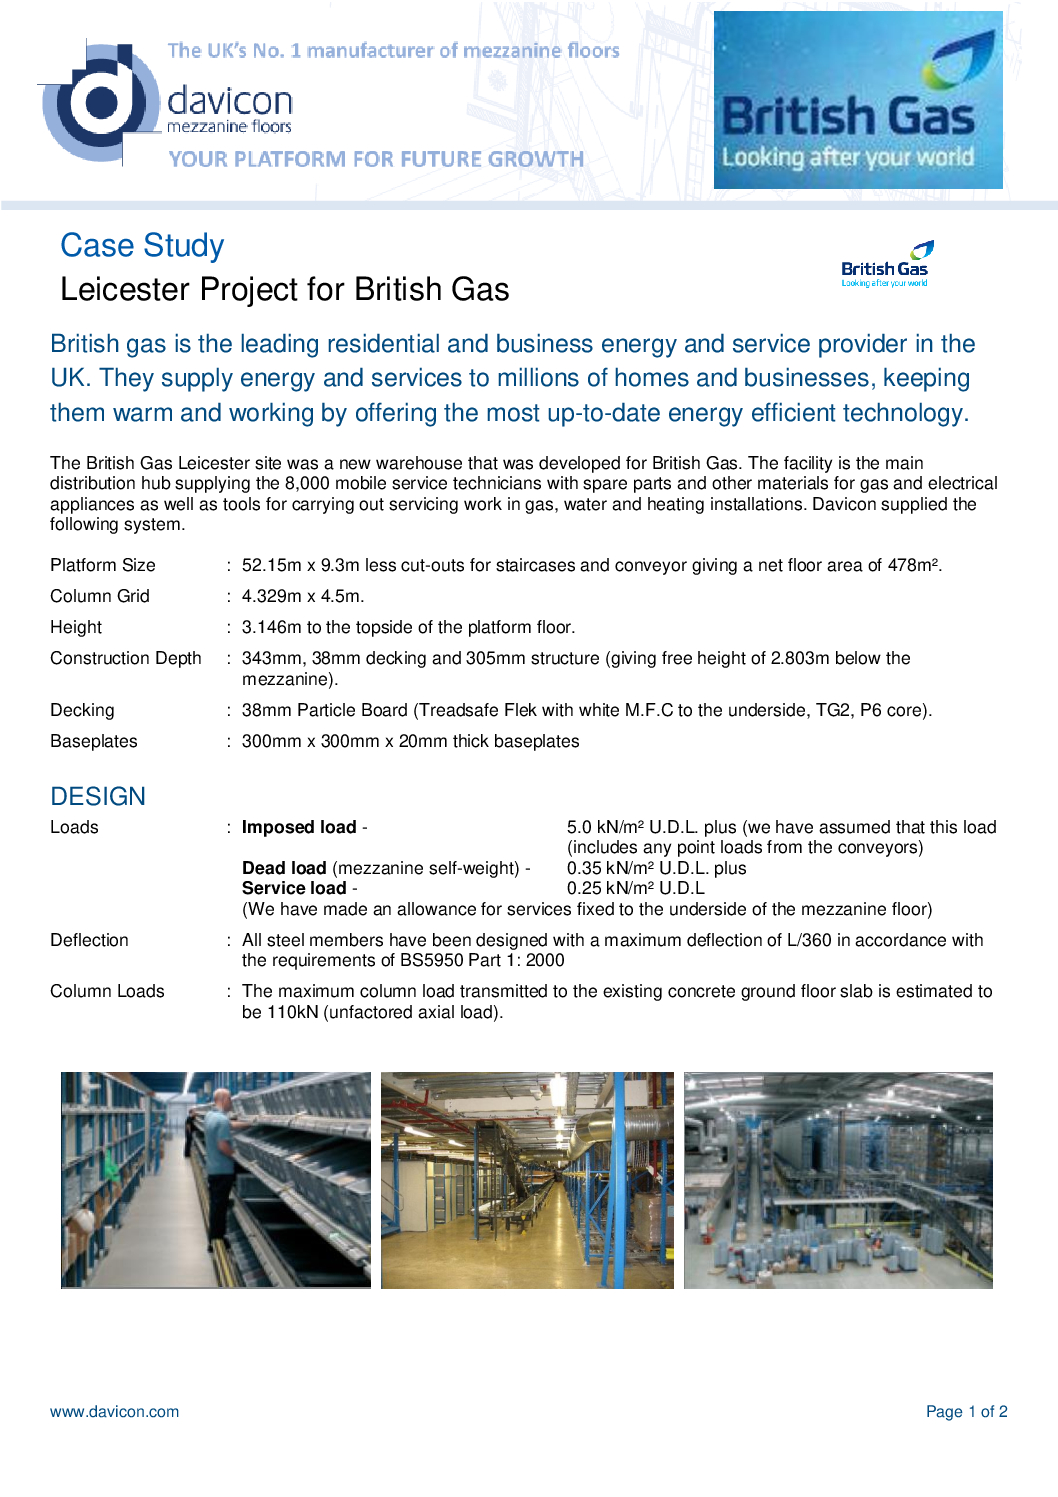 davicon-british-gas-pdf.jpg